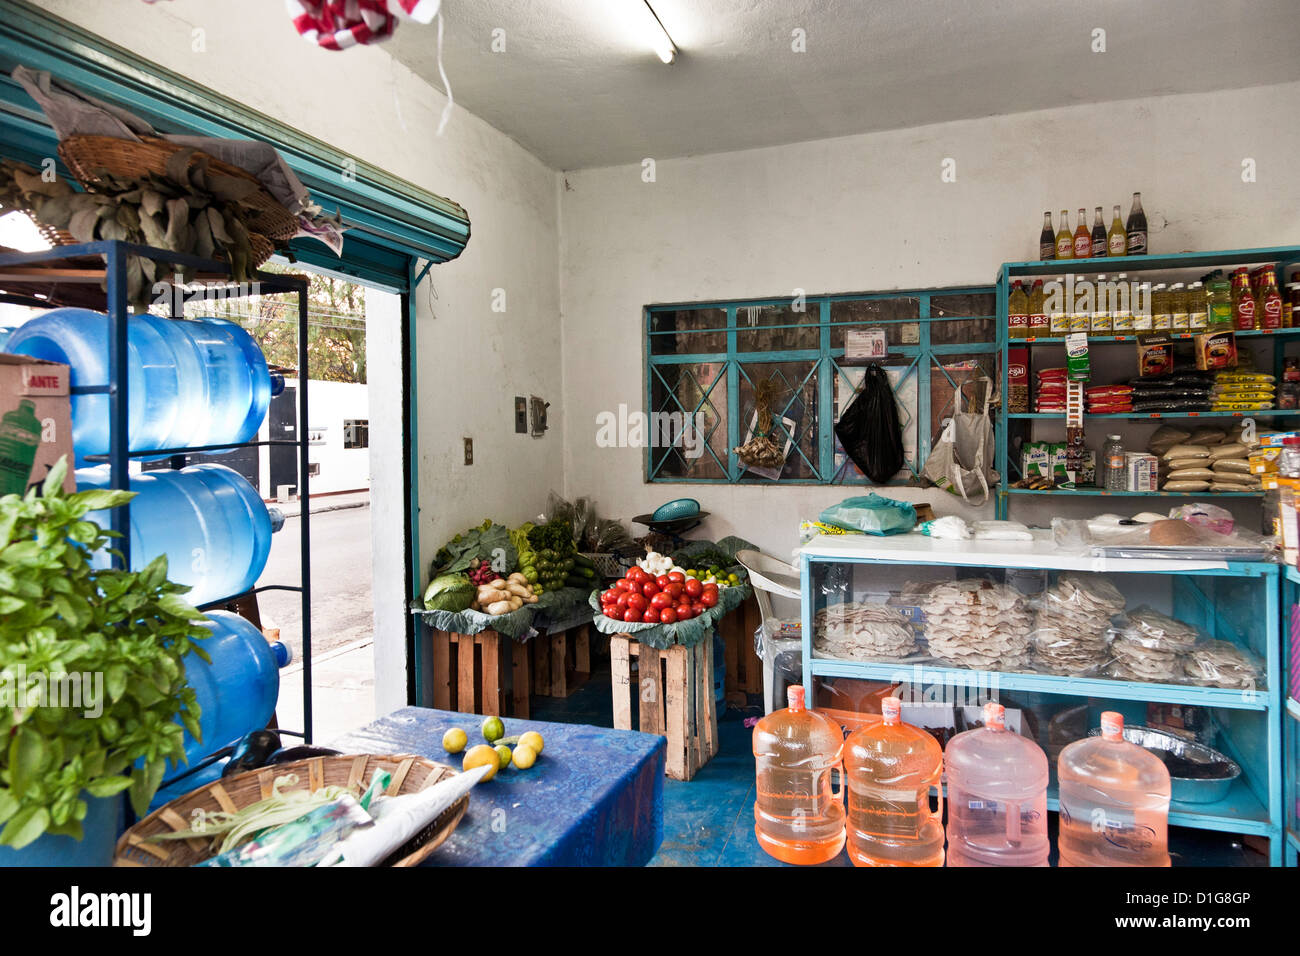 makellose charmant hell beleuchteten inneren Ecken Bodega verkaufen frisches Gemüse Wasser & Lebensmittelgeschäft Heftklammern Oaxaca Mexico Stockfoto